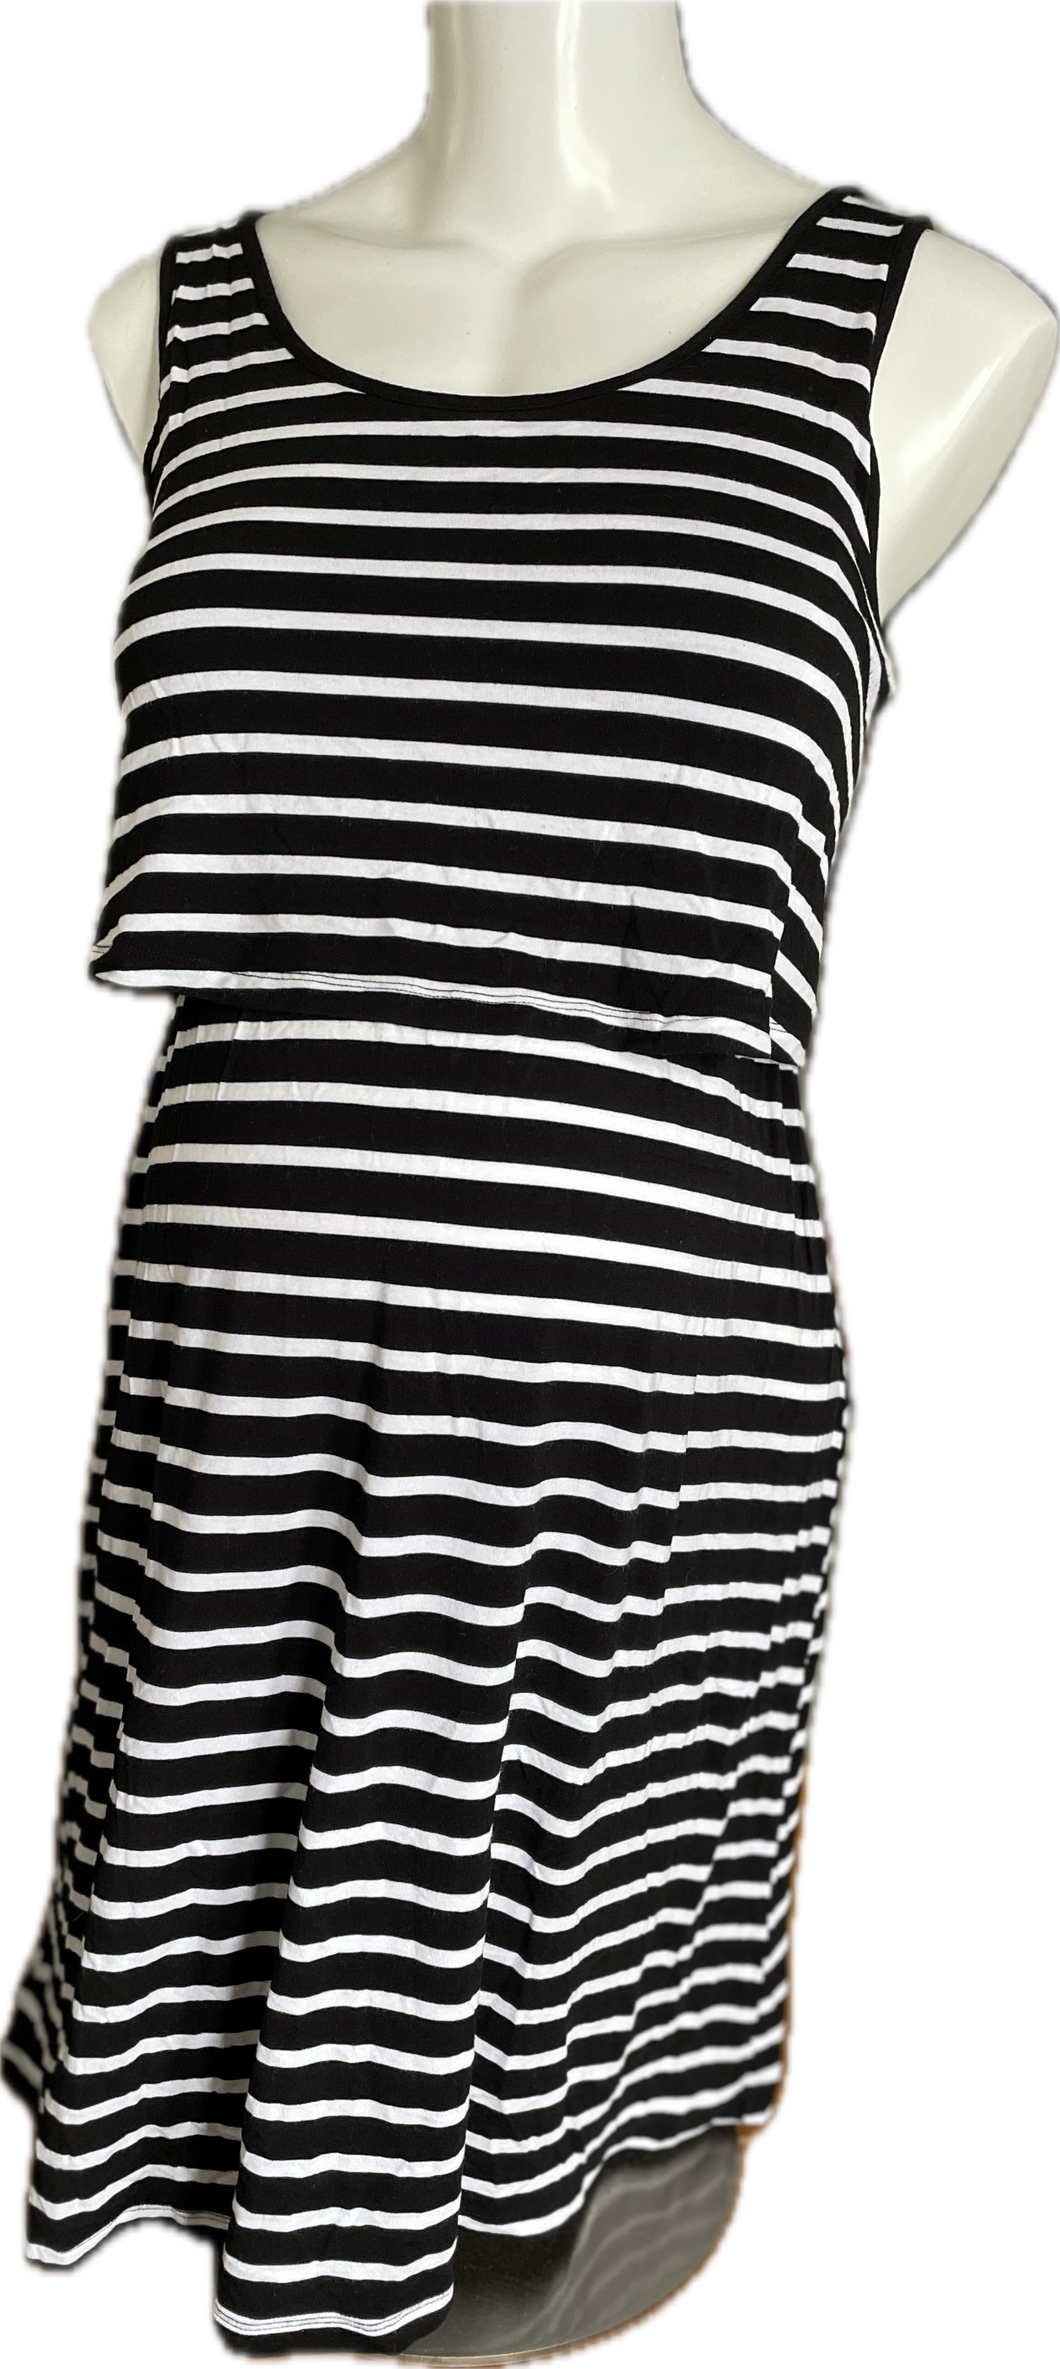 S Old Navy Maternity Feeding Dress in Black and White stripe